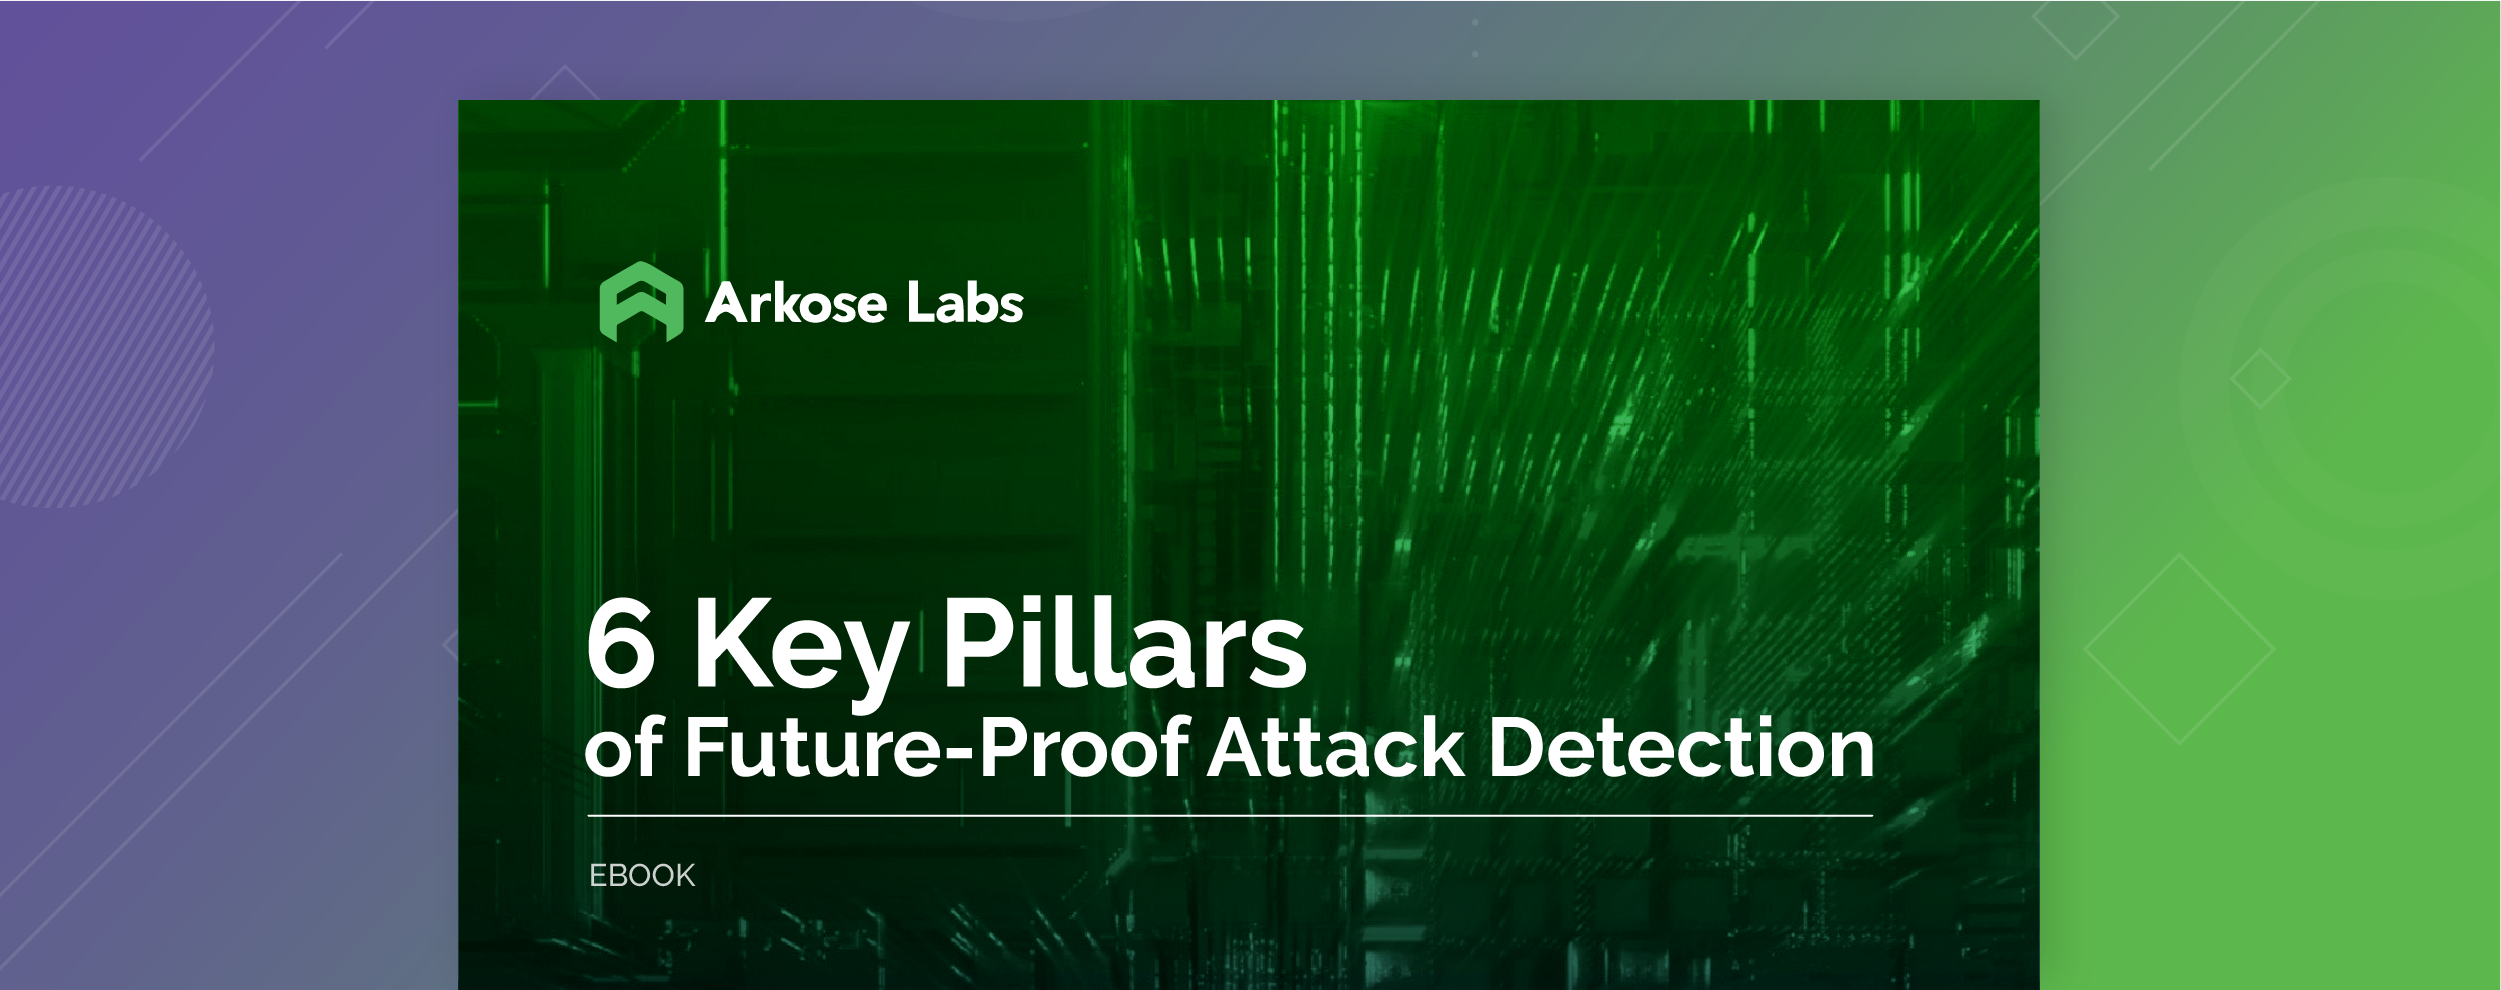 6 Key Pillars of Future-Proof Attack Detection ebook